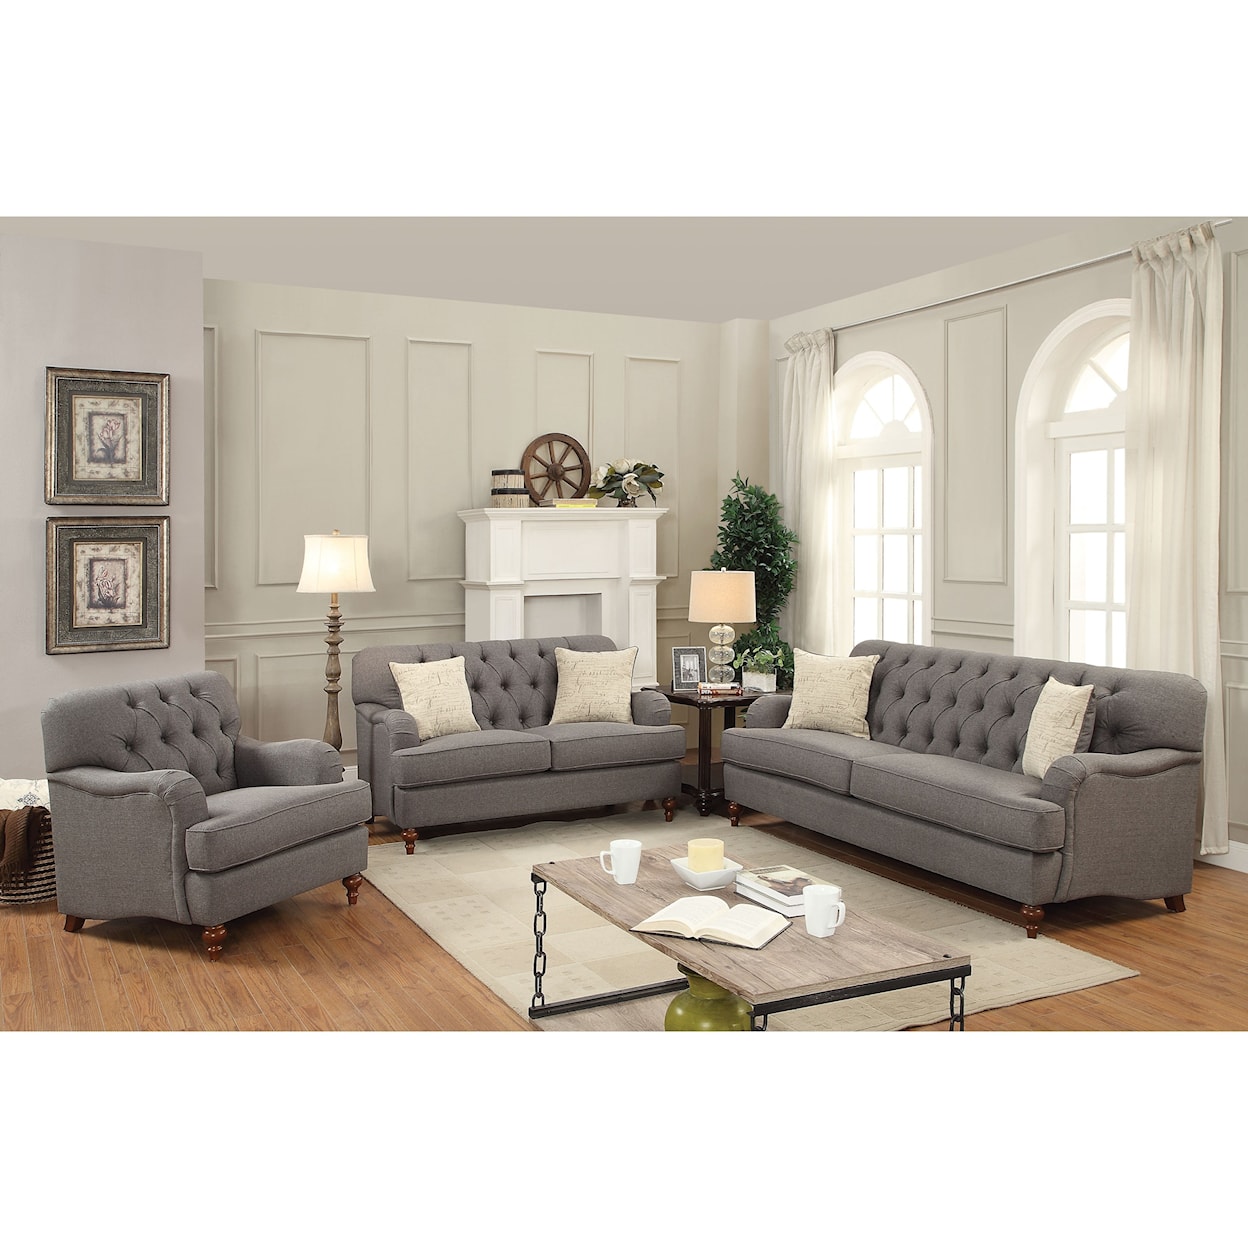 Acme Furniture Alianza Stationary Living Room Group